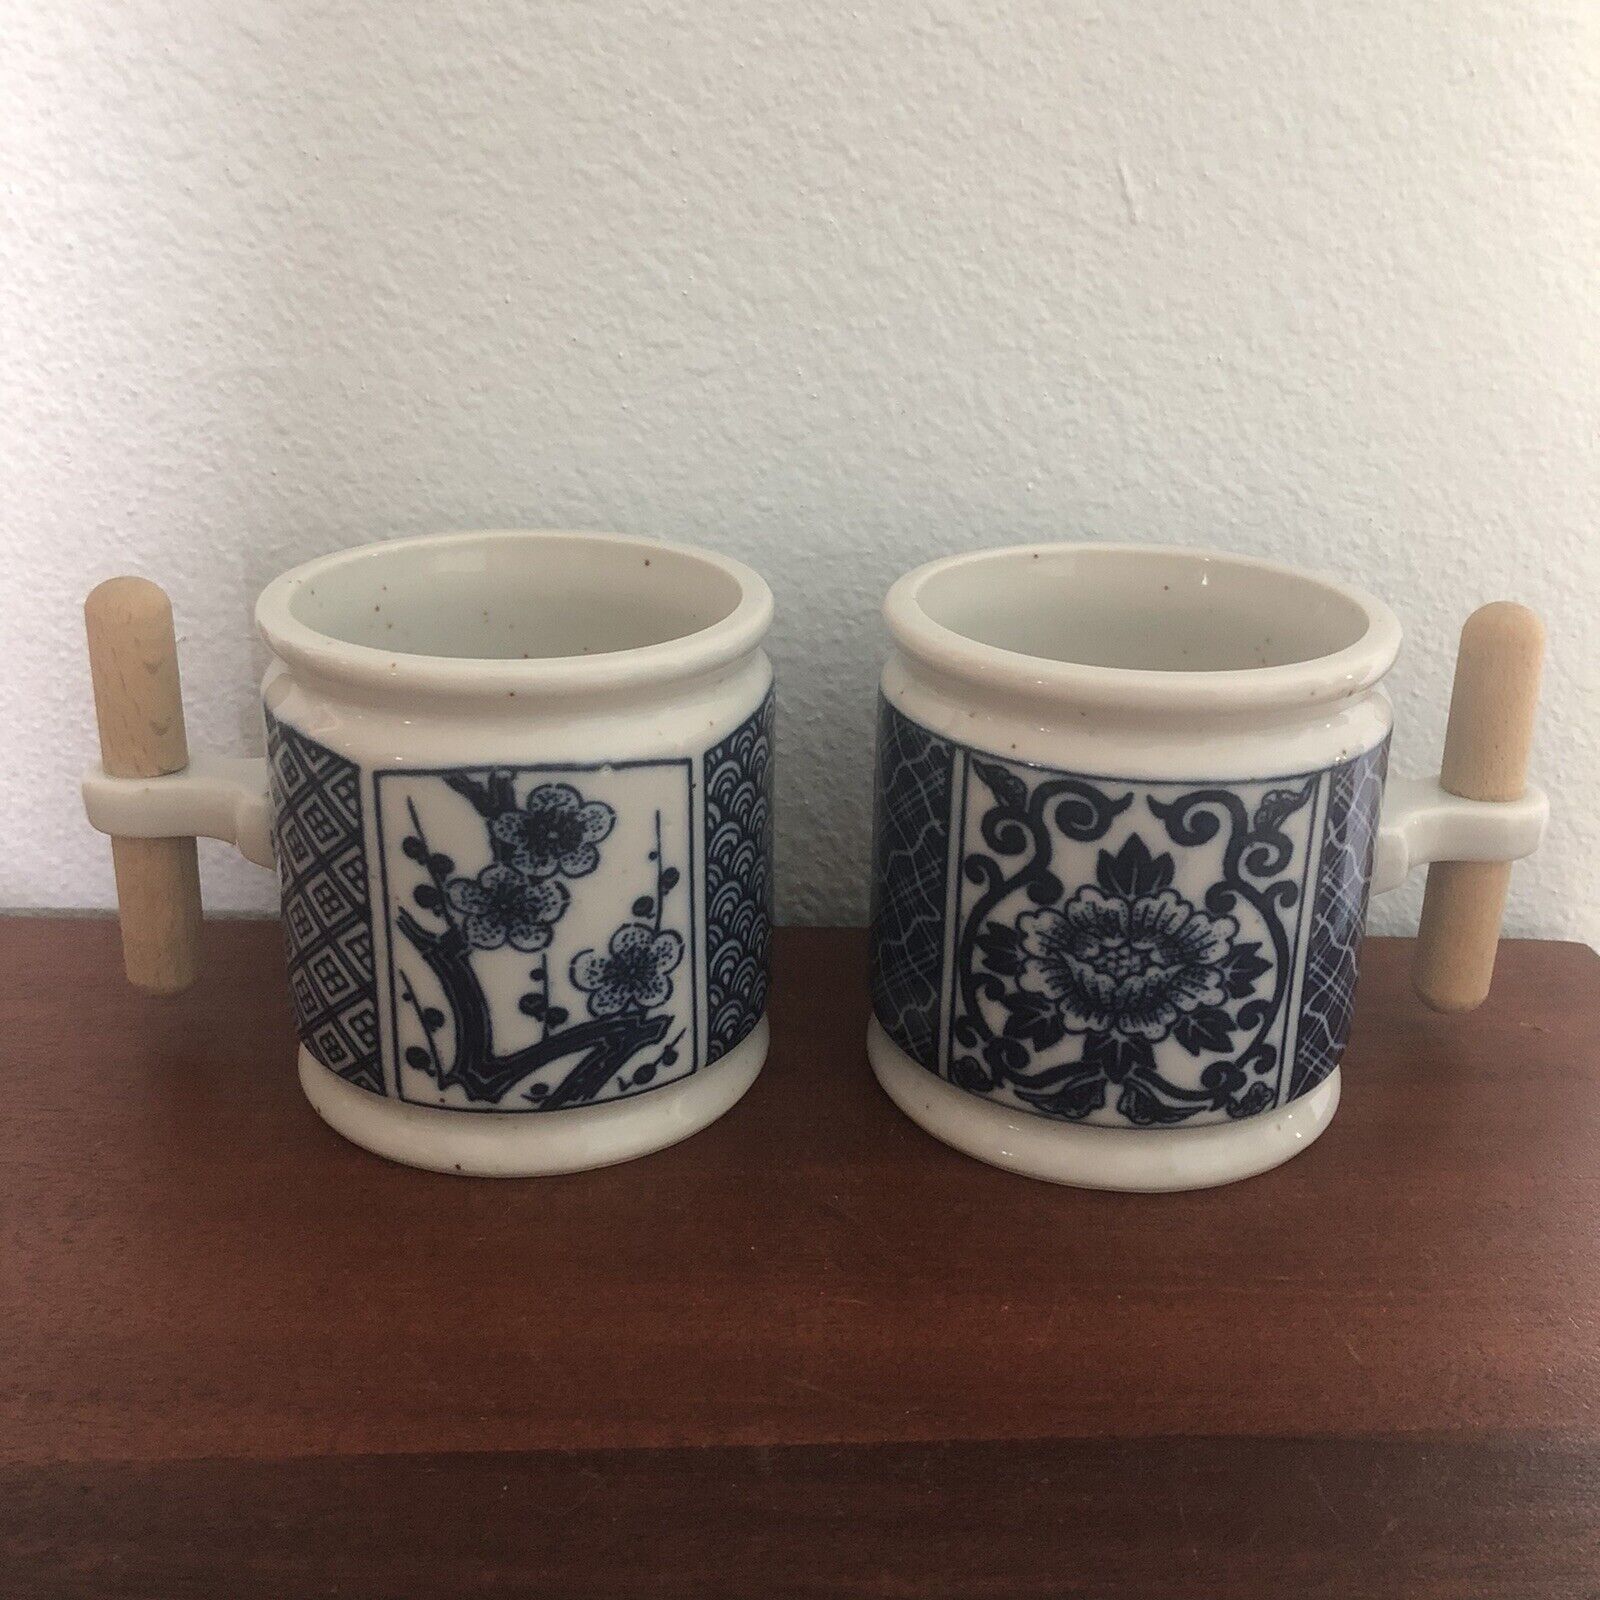 Vintage Pair Otagiri Coffee Mug Cup Speckled Stoneware Unique Wood Handles 1970s